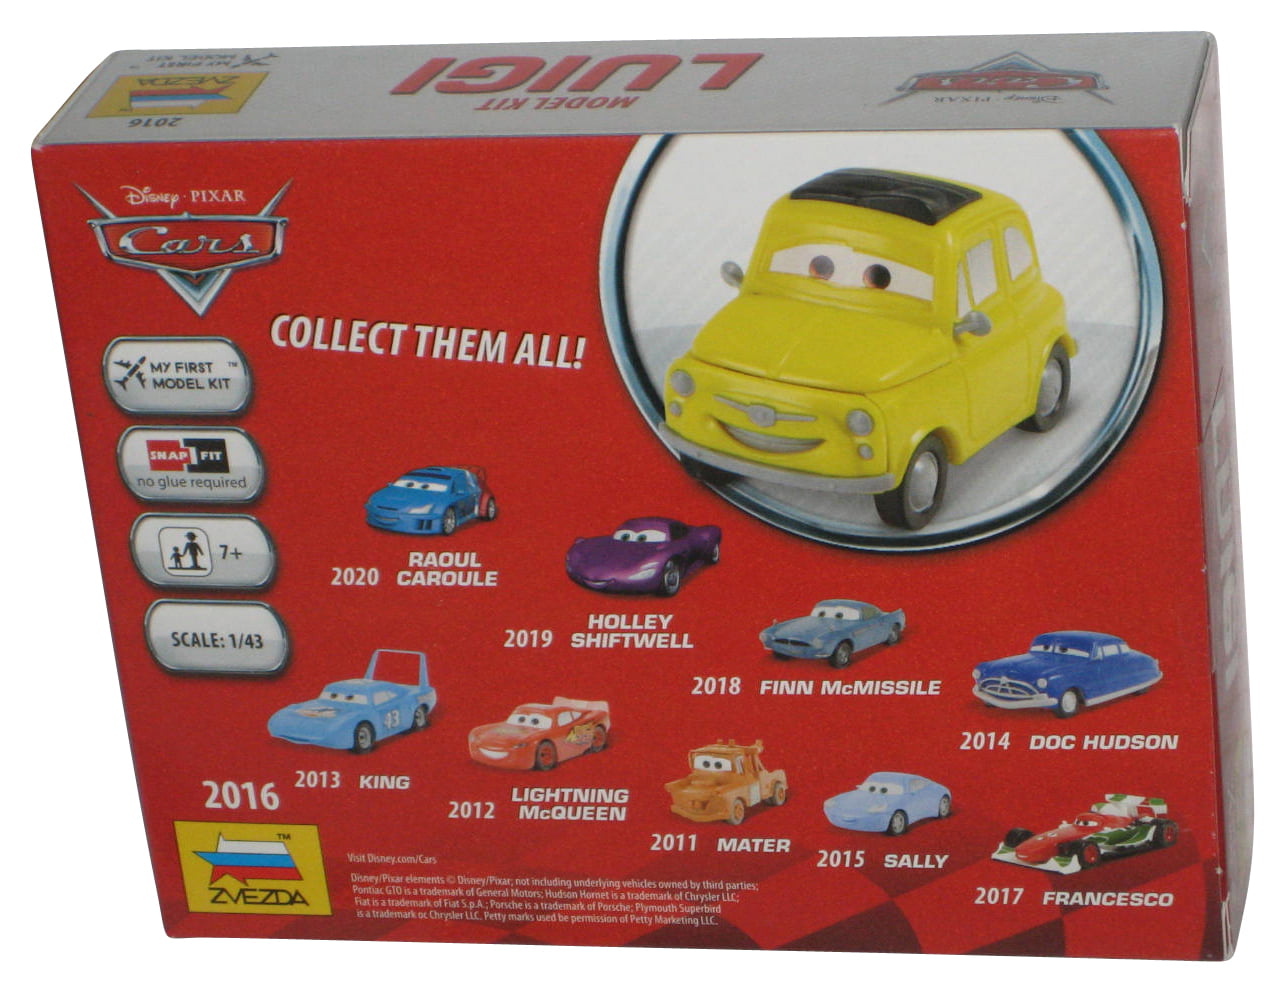 Hasbro Monopoly Disney Pixar holley shiftwell car plastic token charm miniature. 